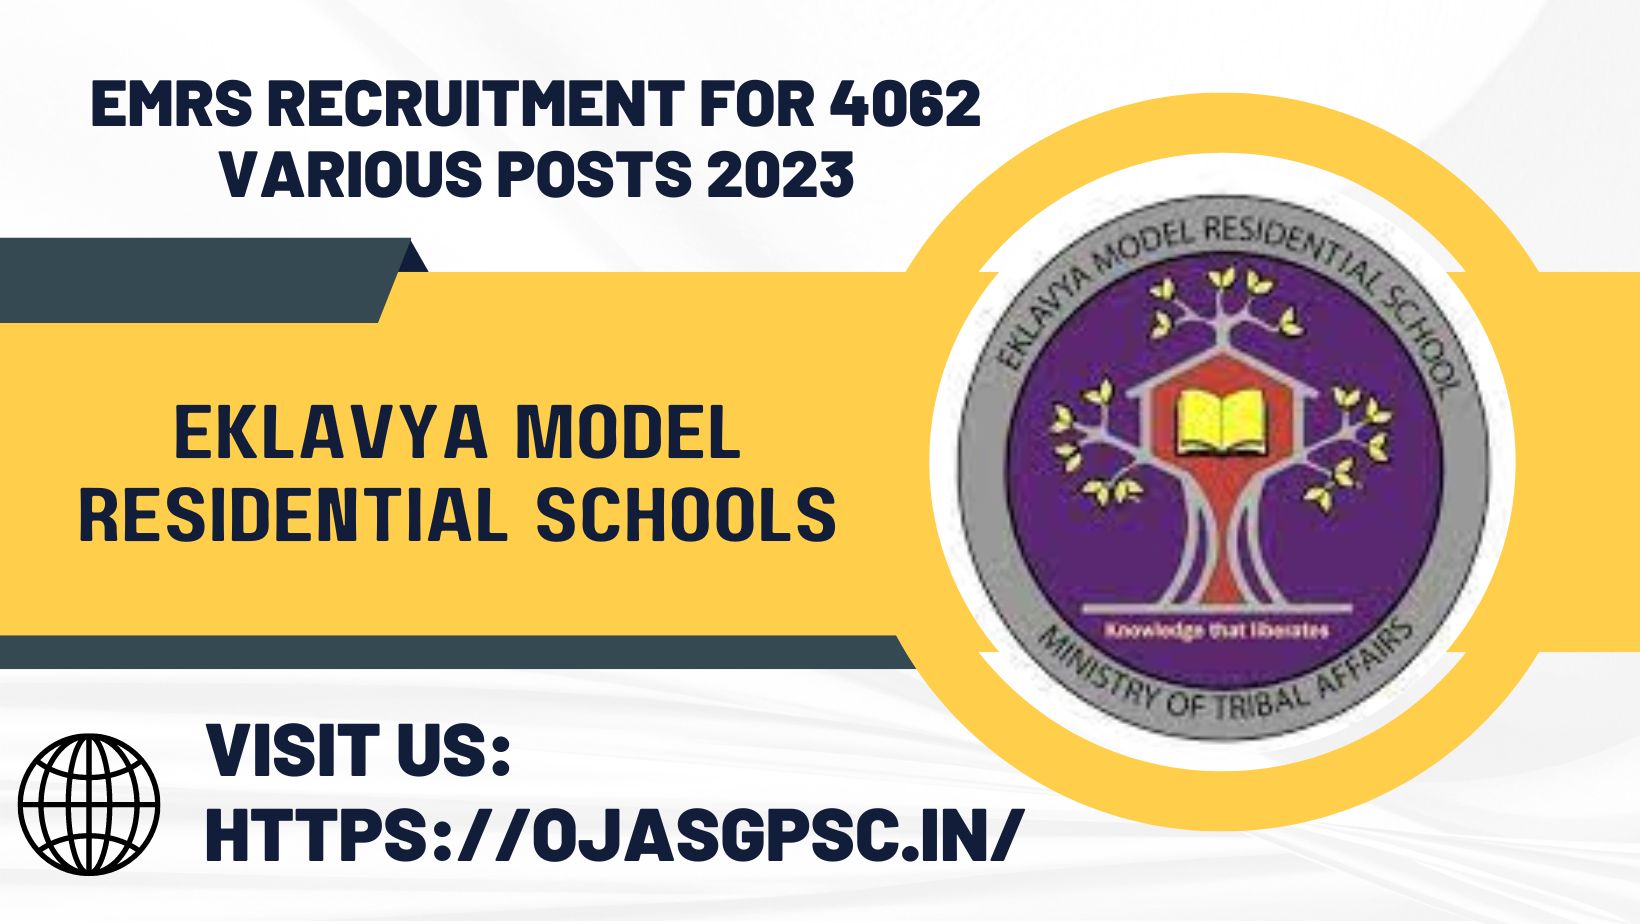 Eklavya Model Residential Schools (EMRS) Recruitment for 4062 Various Posts 2023